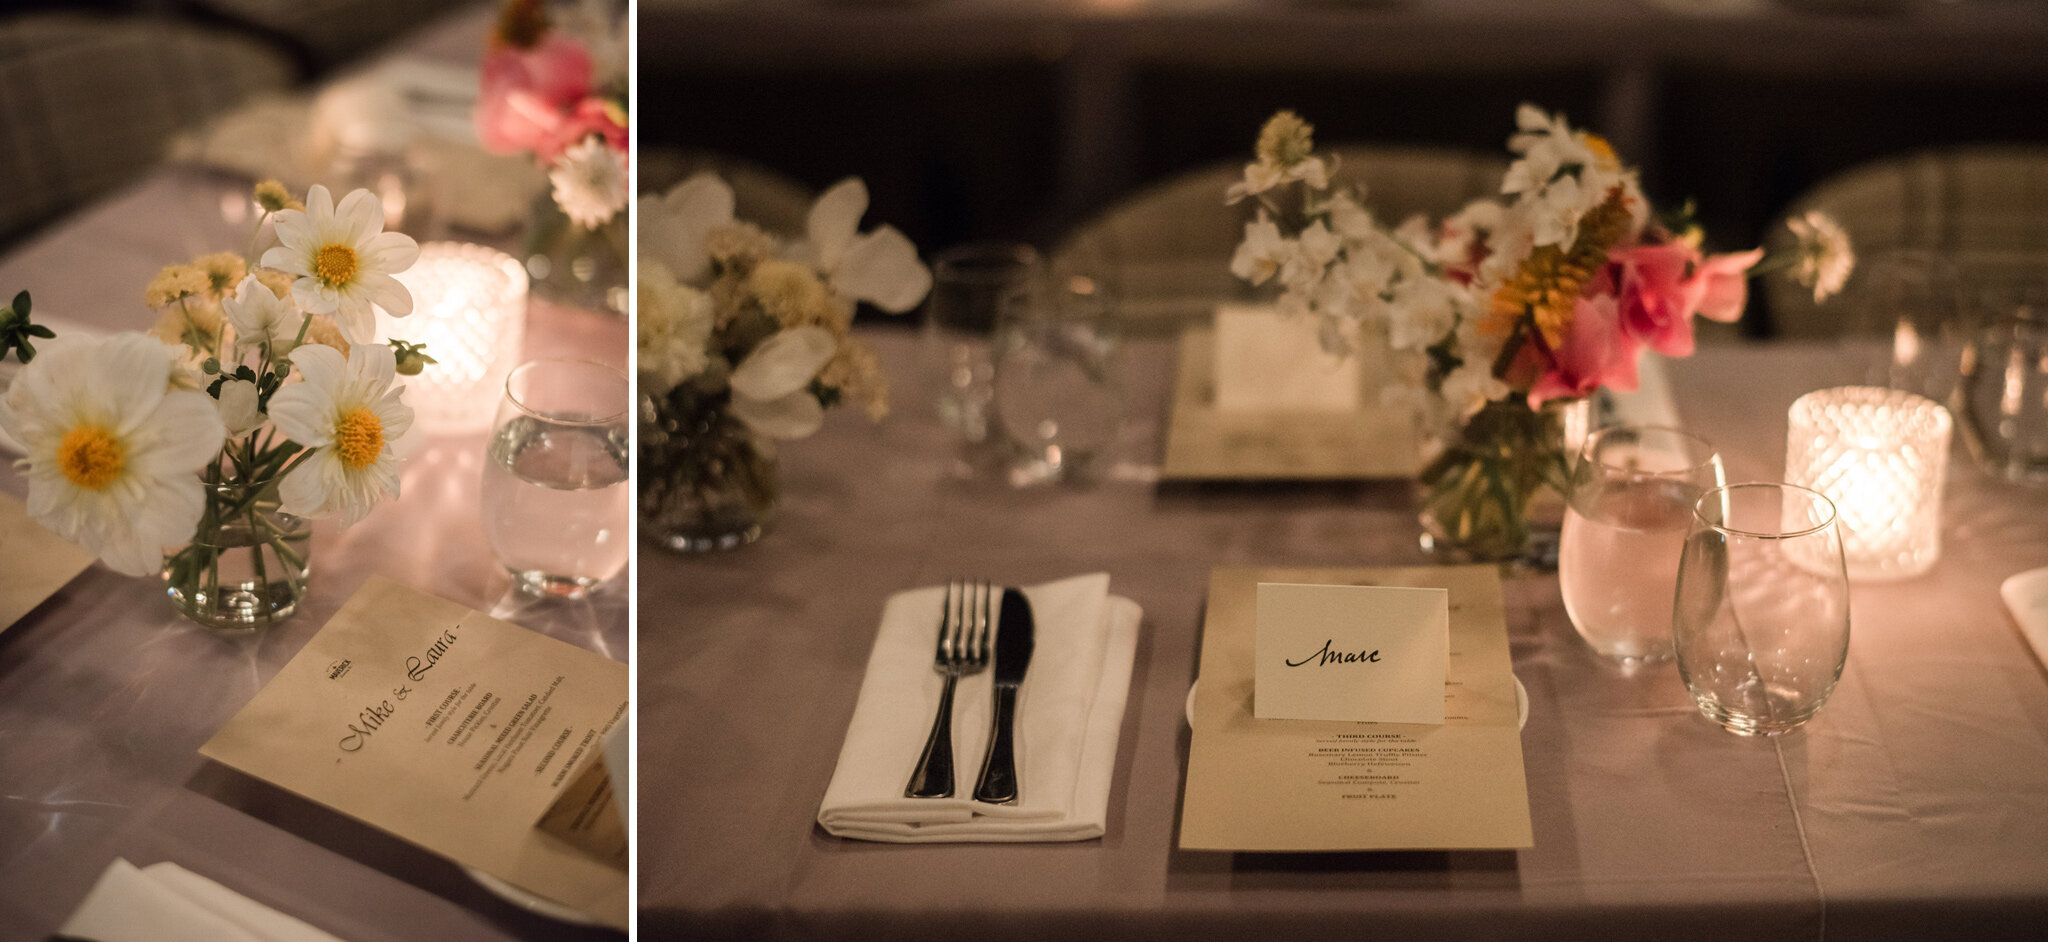 859-reception-decor-simple-flowers-bud-vase-restaurant-brewery-wedding-toronto-maverick.jpg